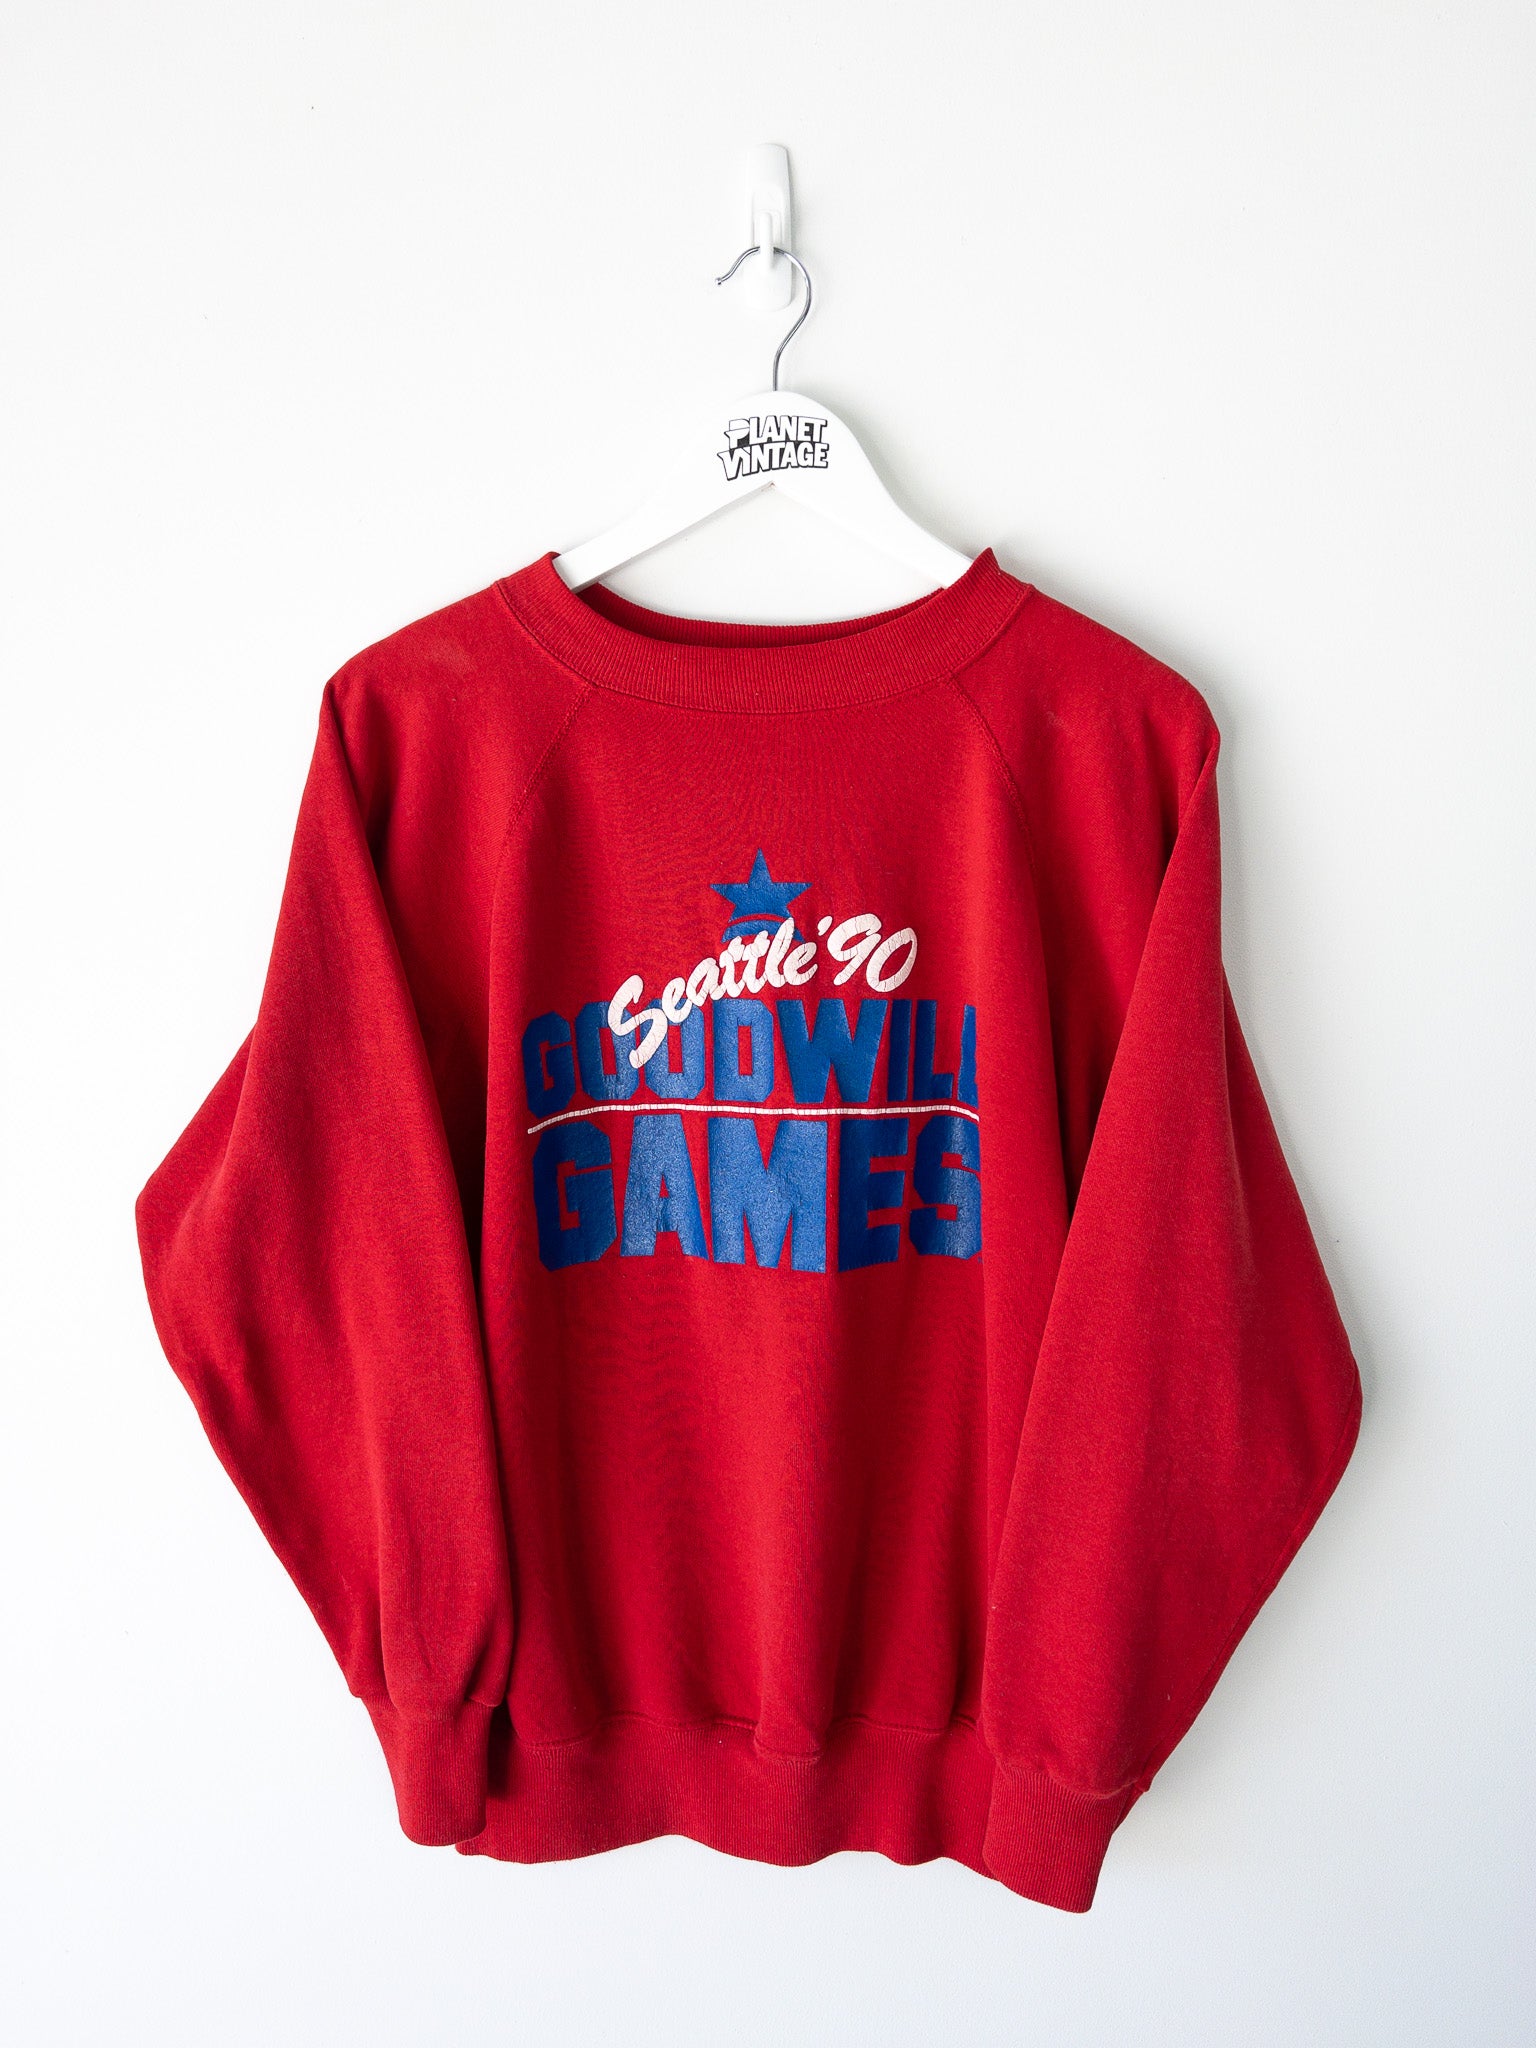 Vintage Goodwill Games Seattle 1990 Sweatshirt (L)